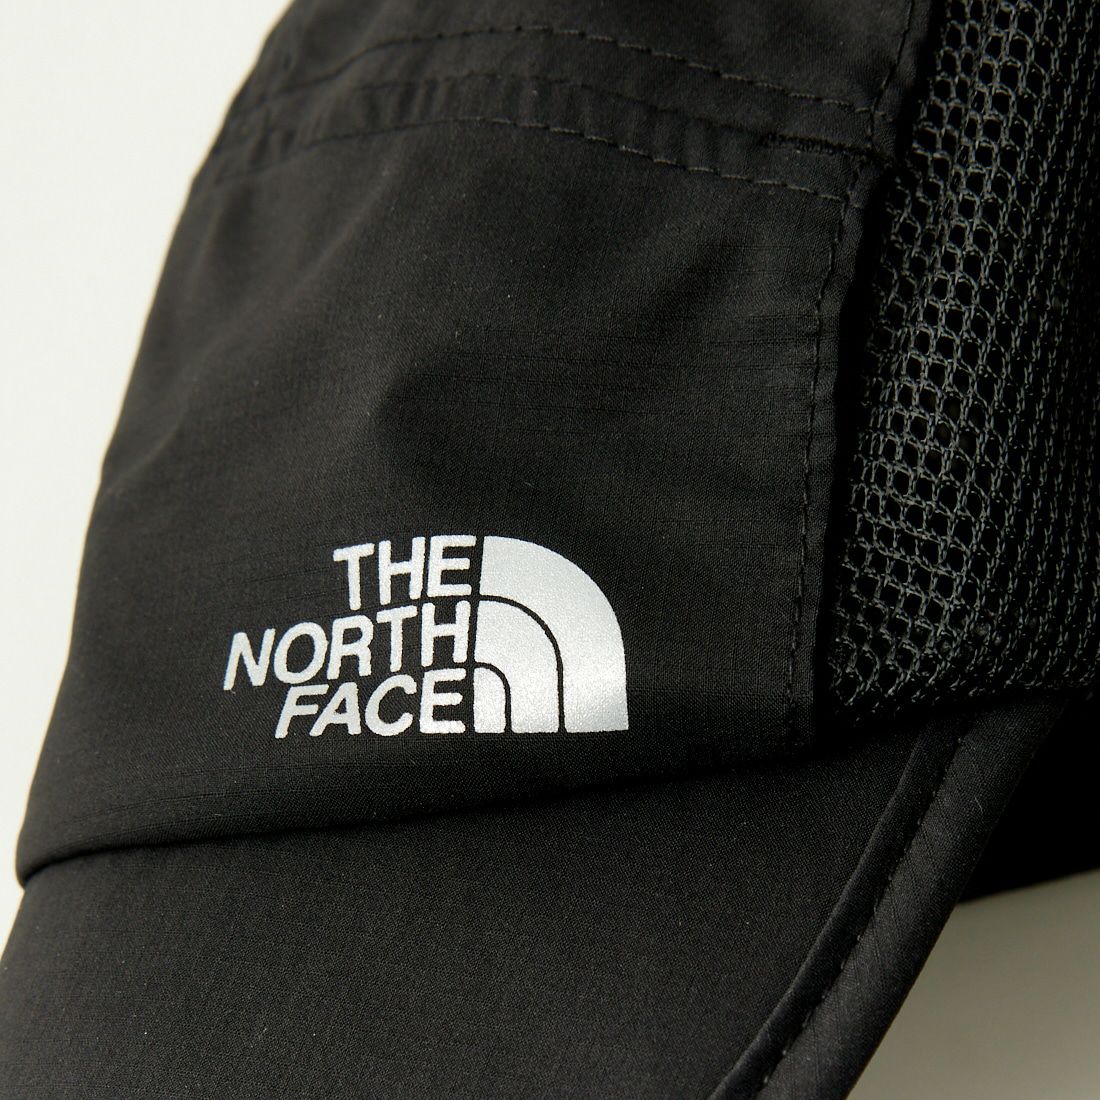 THE NORTH FACE [ザ ノースフェイス] プロンプトキャップ [NN42372]